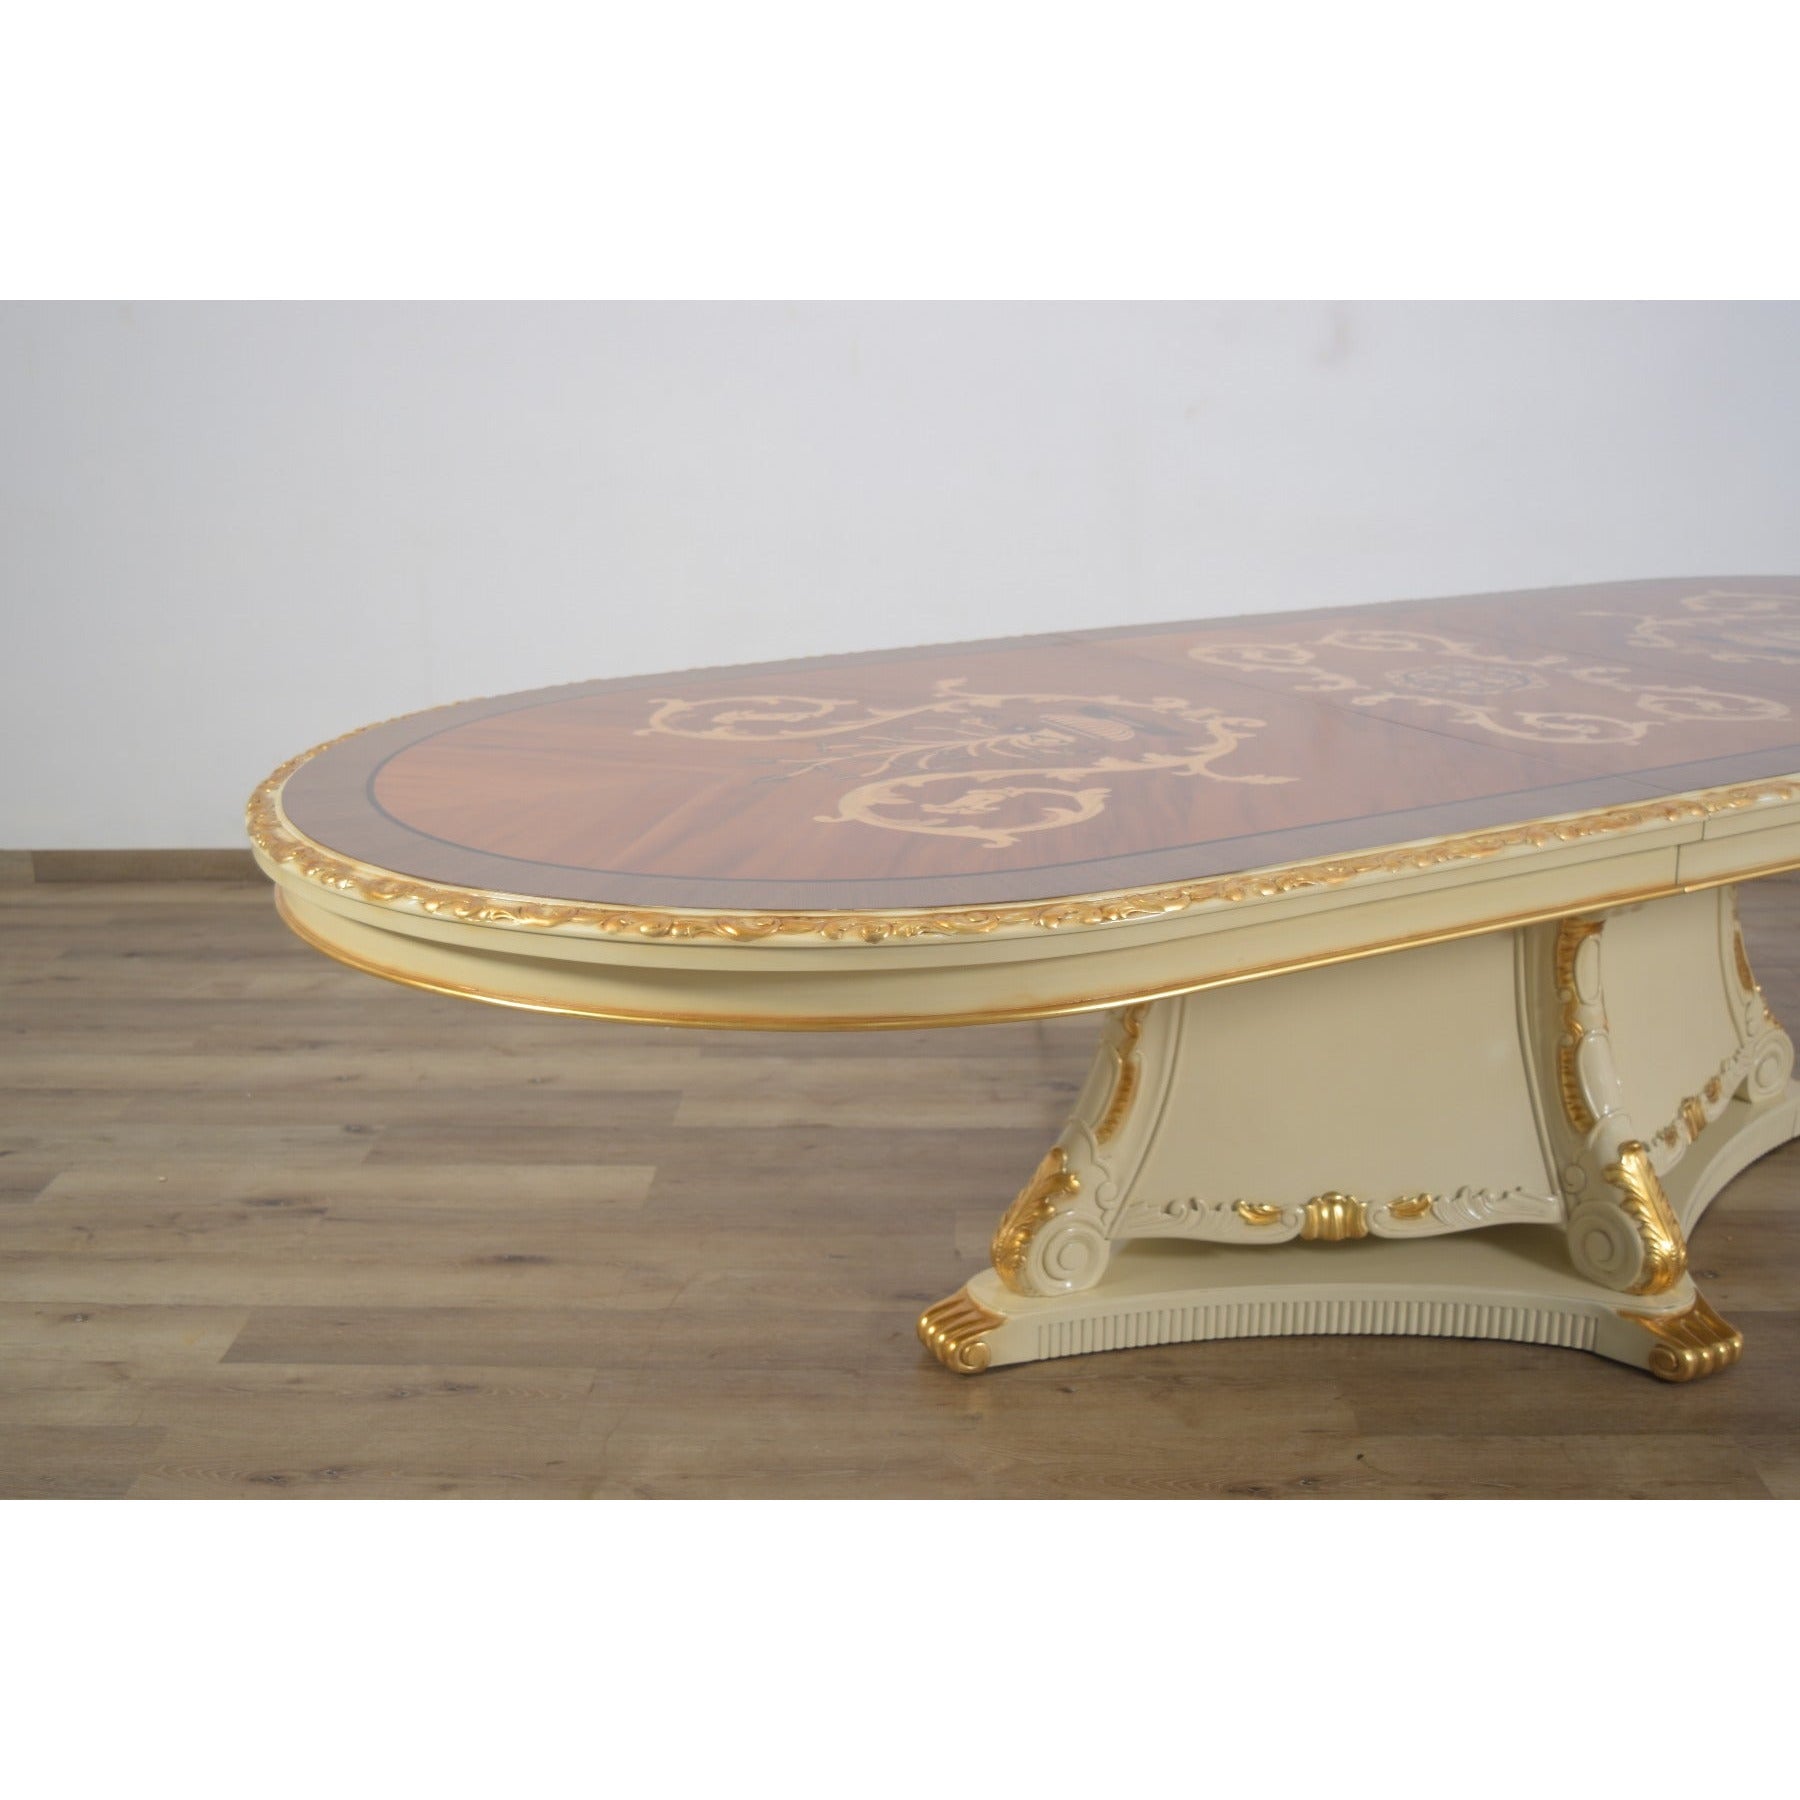 European Furniture - Bellagio 5 Piece Dining Room Set in Beige & Gold Leaf - 40059-5SET - New Star Living